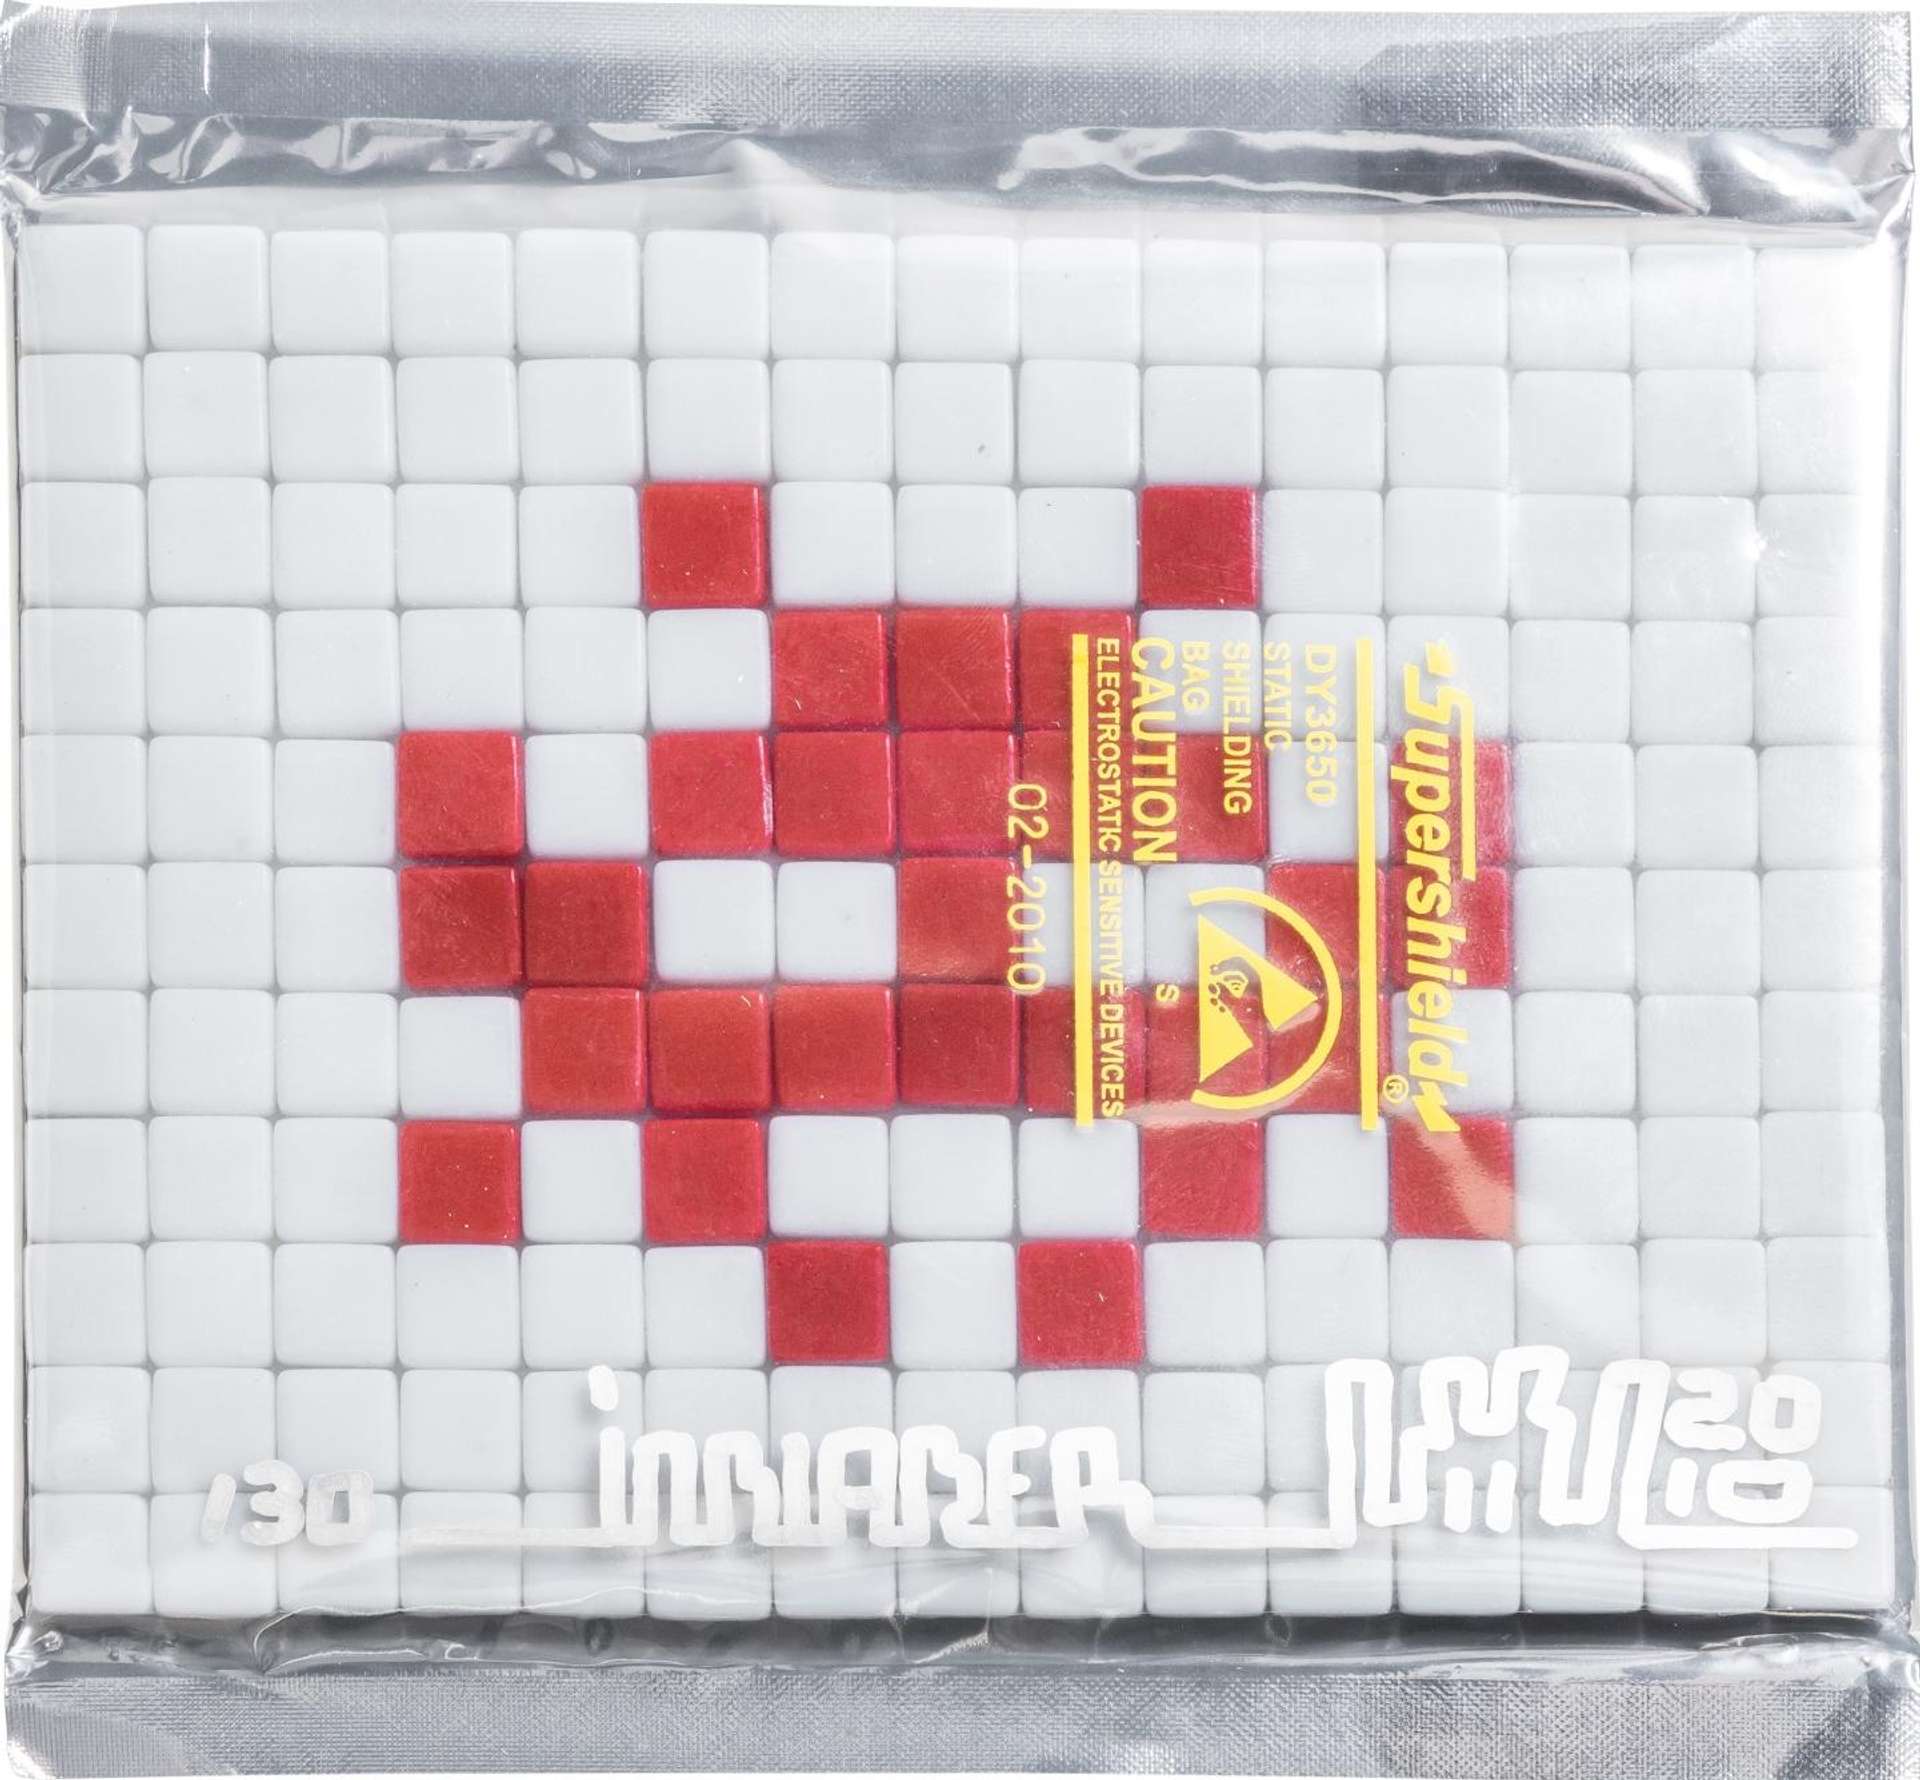 Invasion Kit 13, Made In Japan - Signed Ceramic by Invader 2010 - MyArtBroker